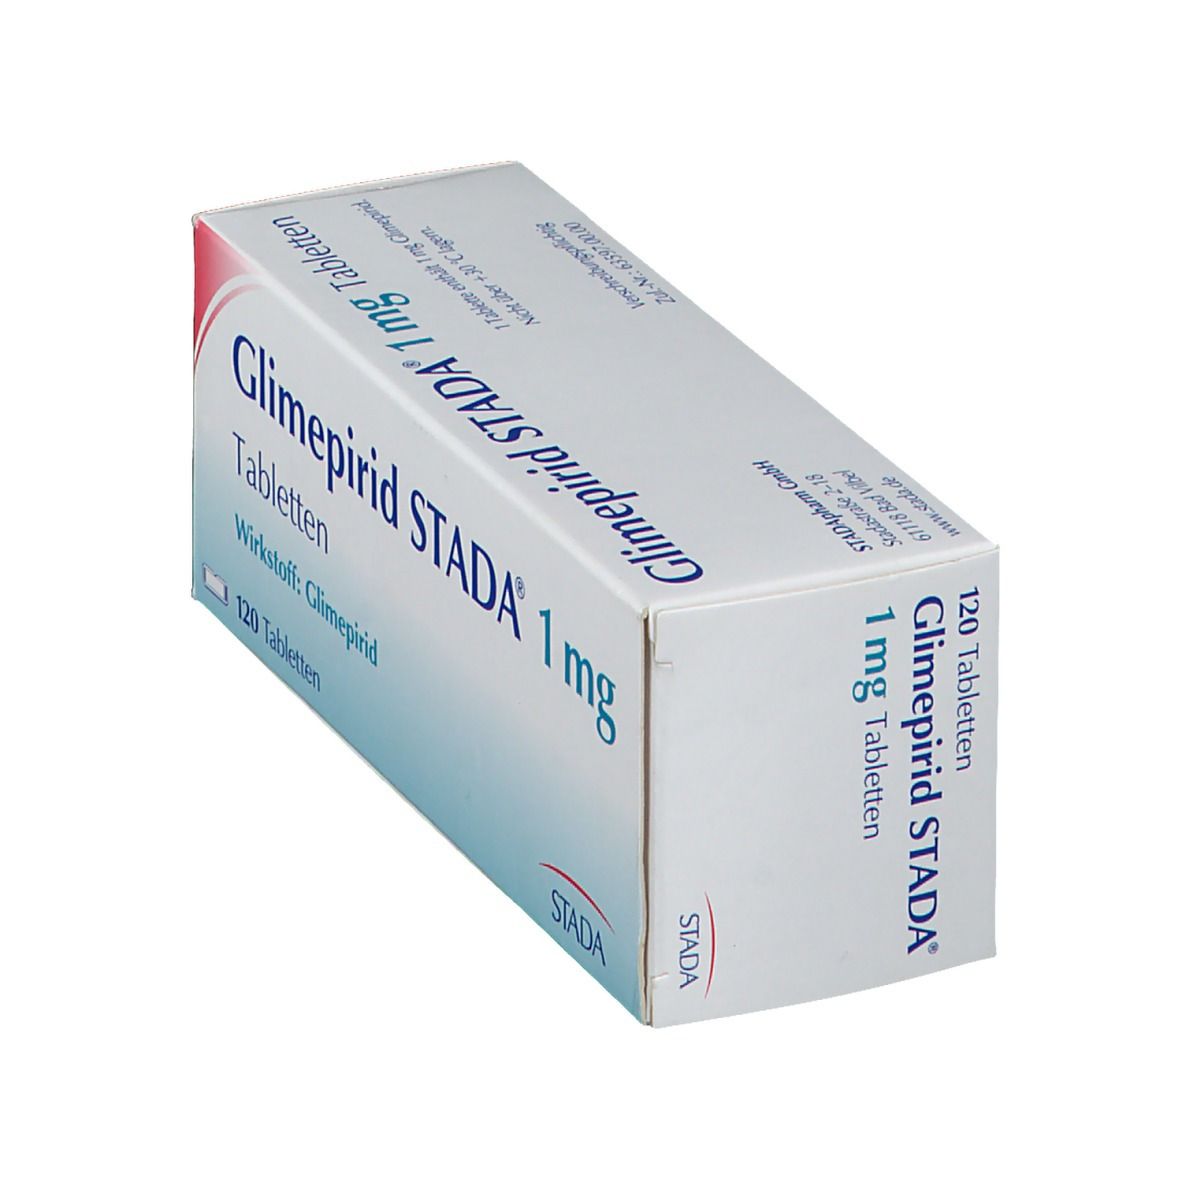 Glimepirid STADA® 1 mg